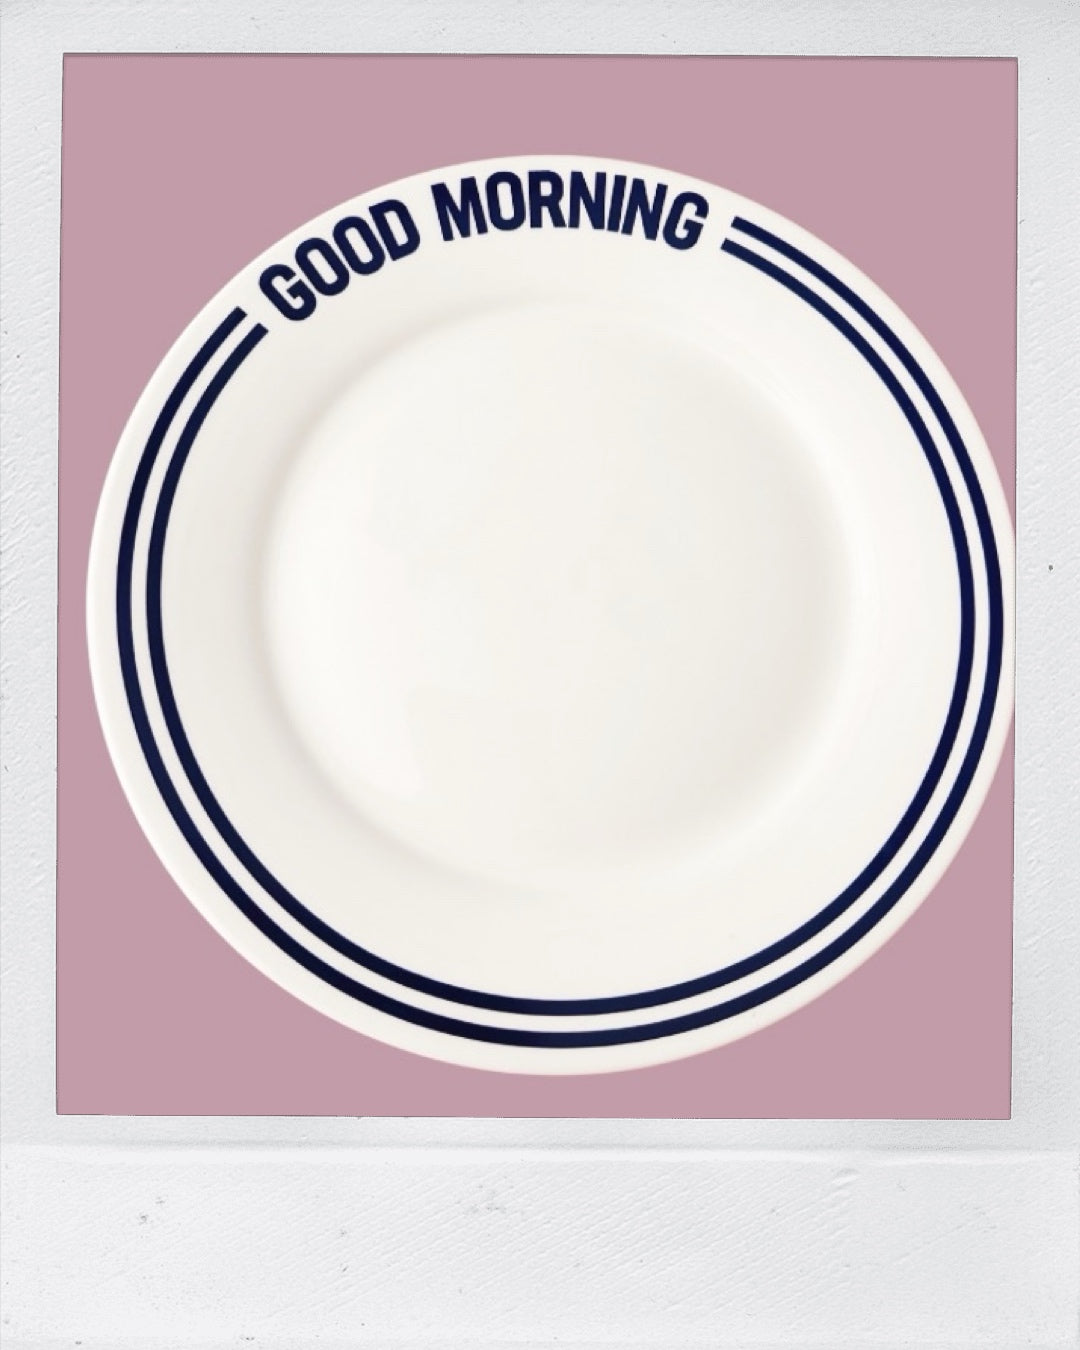 Good Morning plate